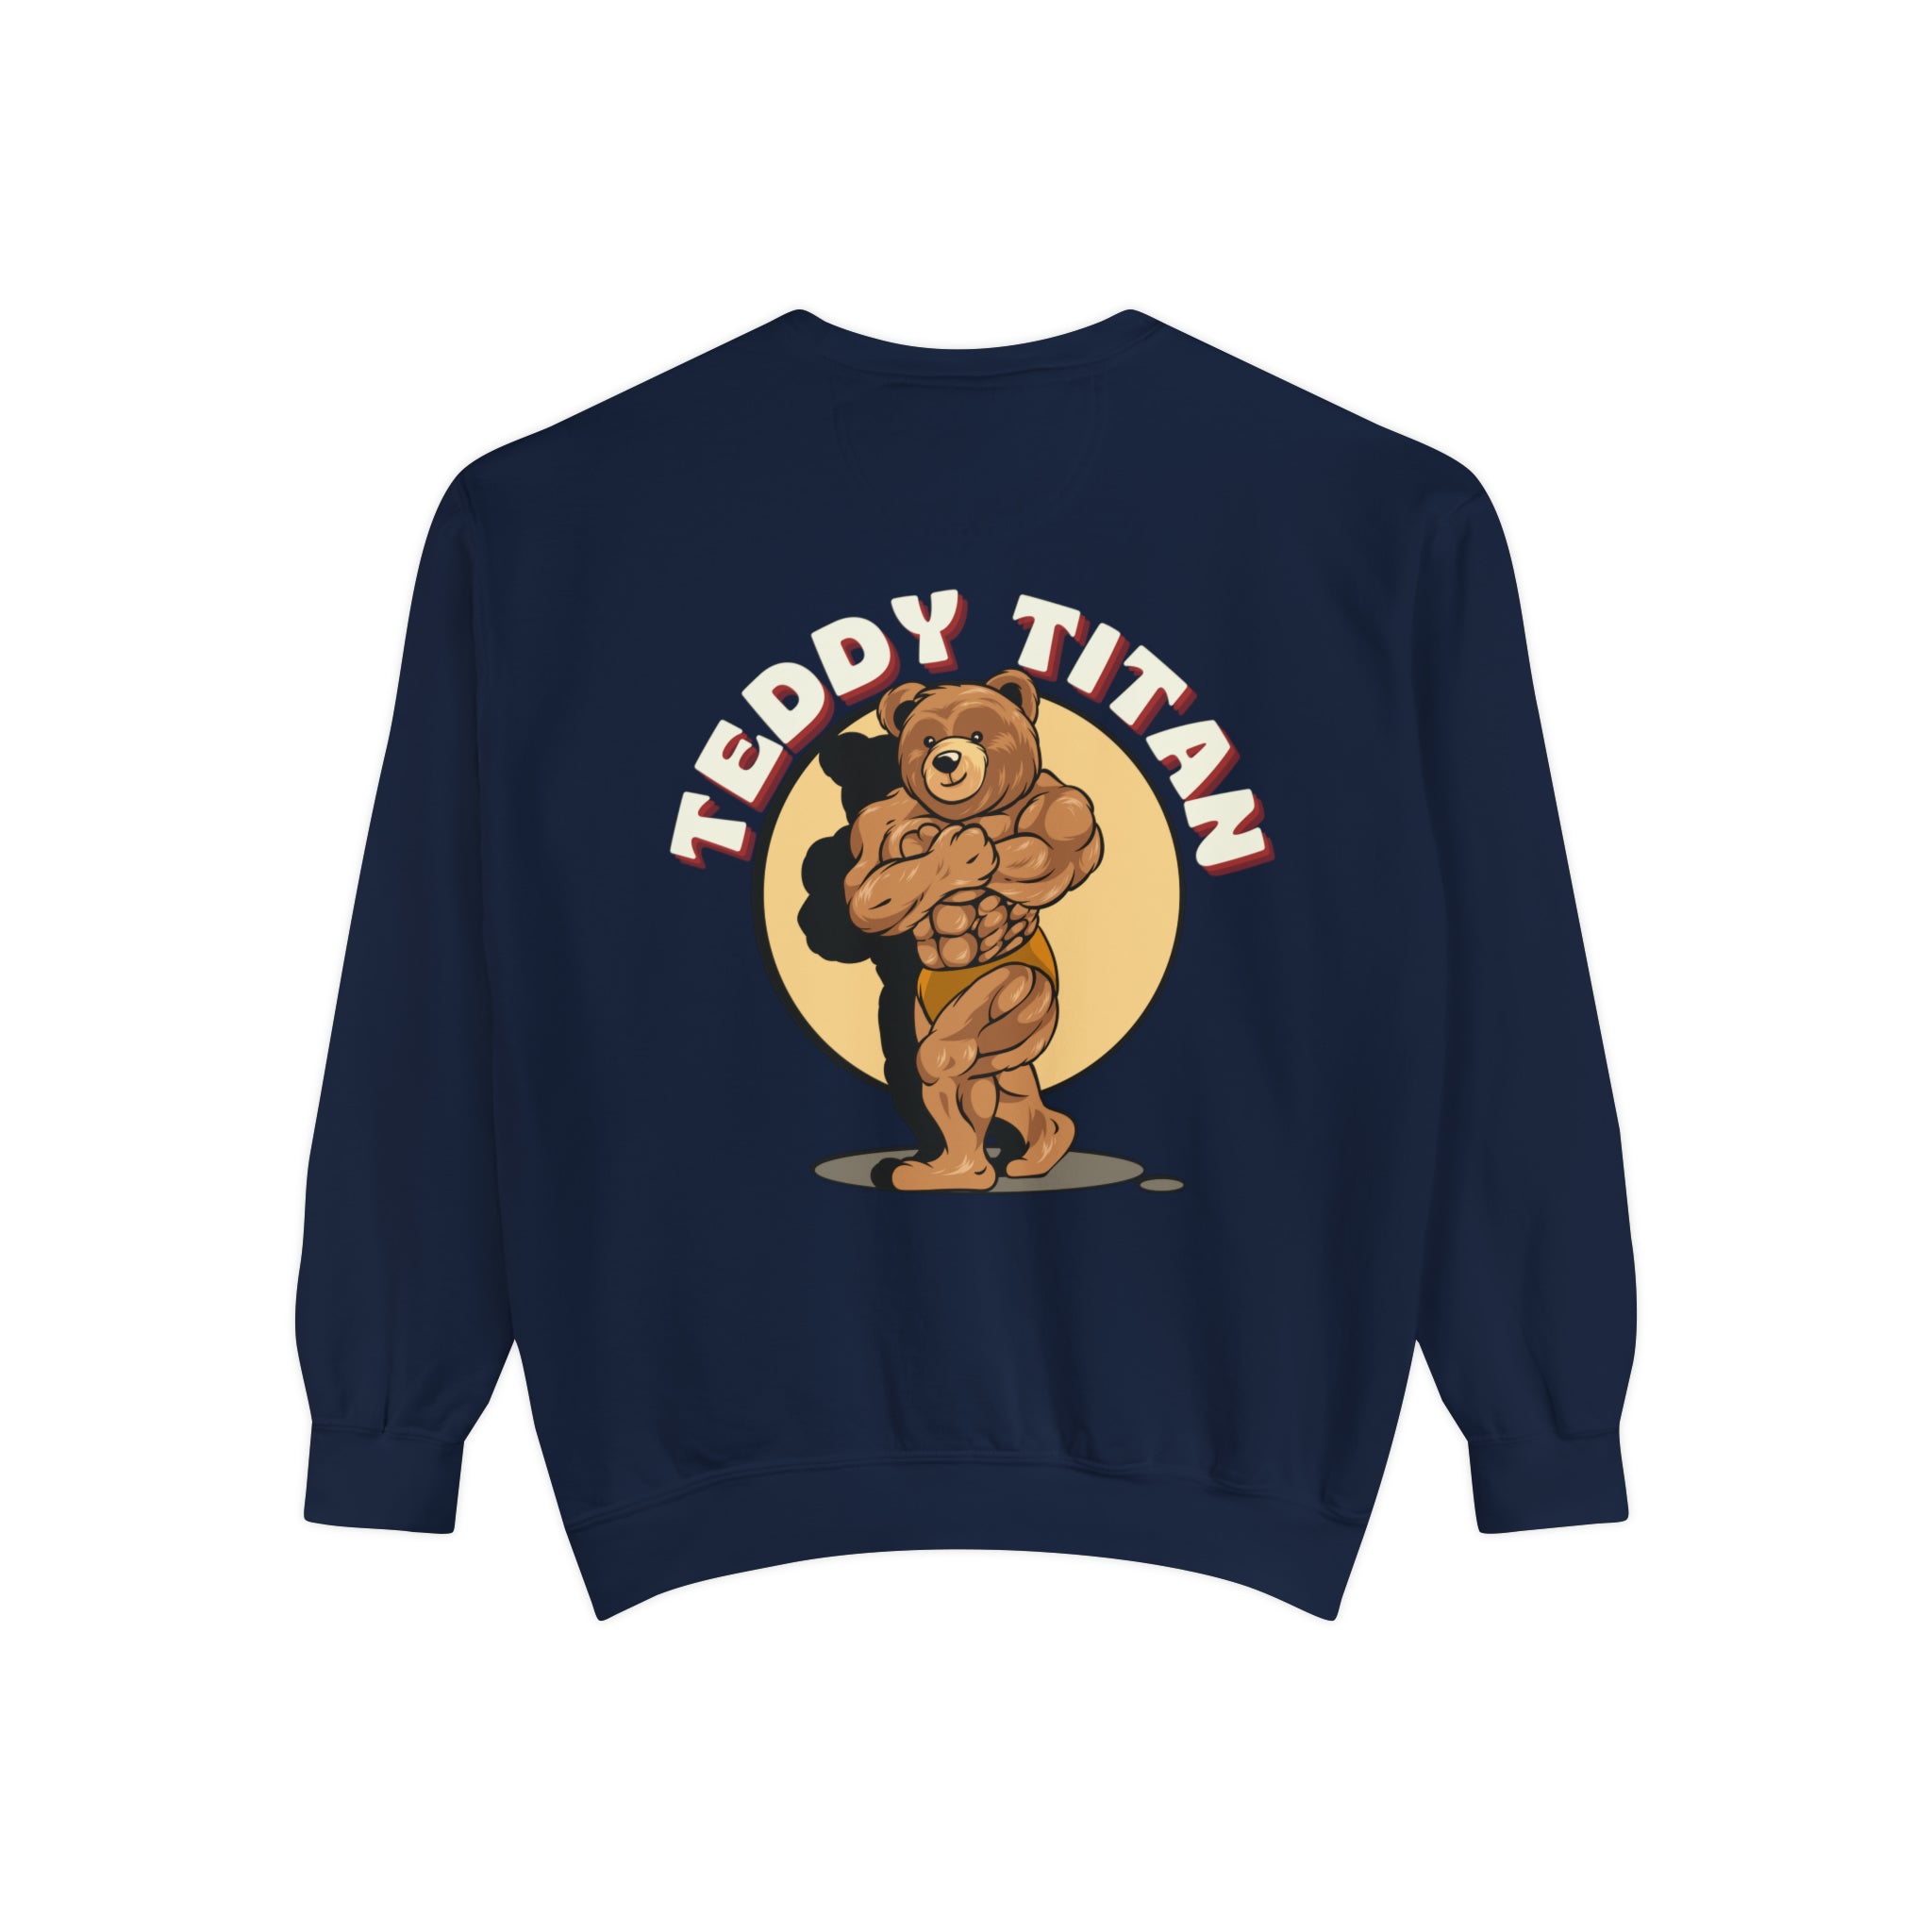 Teddy Titan Unisex Sweatshirt